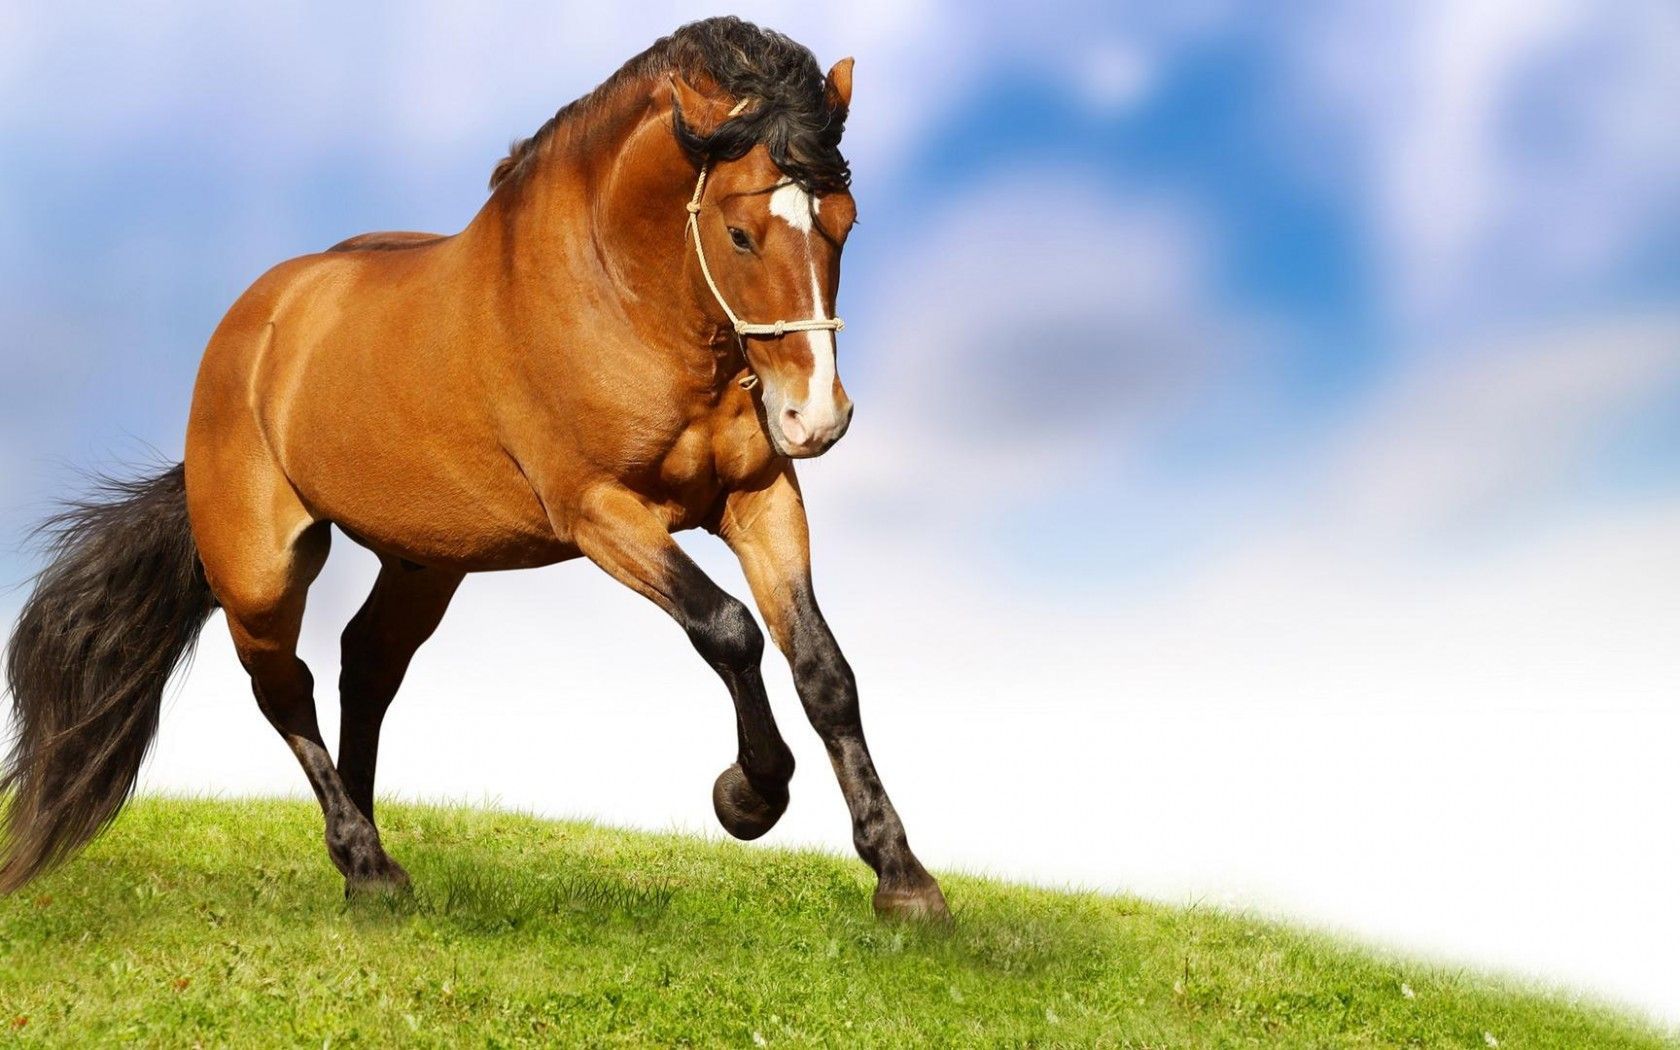 Red Horse Wallpaper Widescreen HD Free Download. Horse wallpaper, Horses, Horse picture